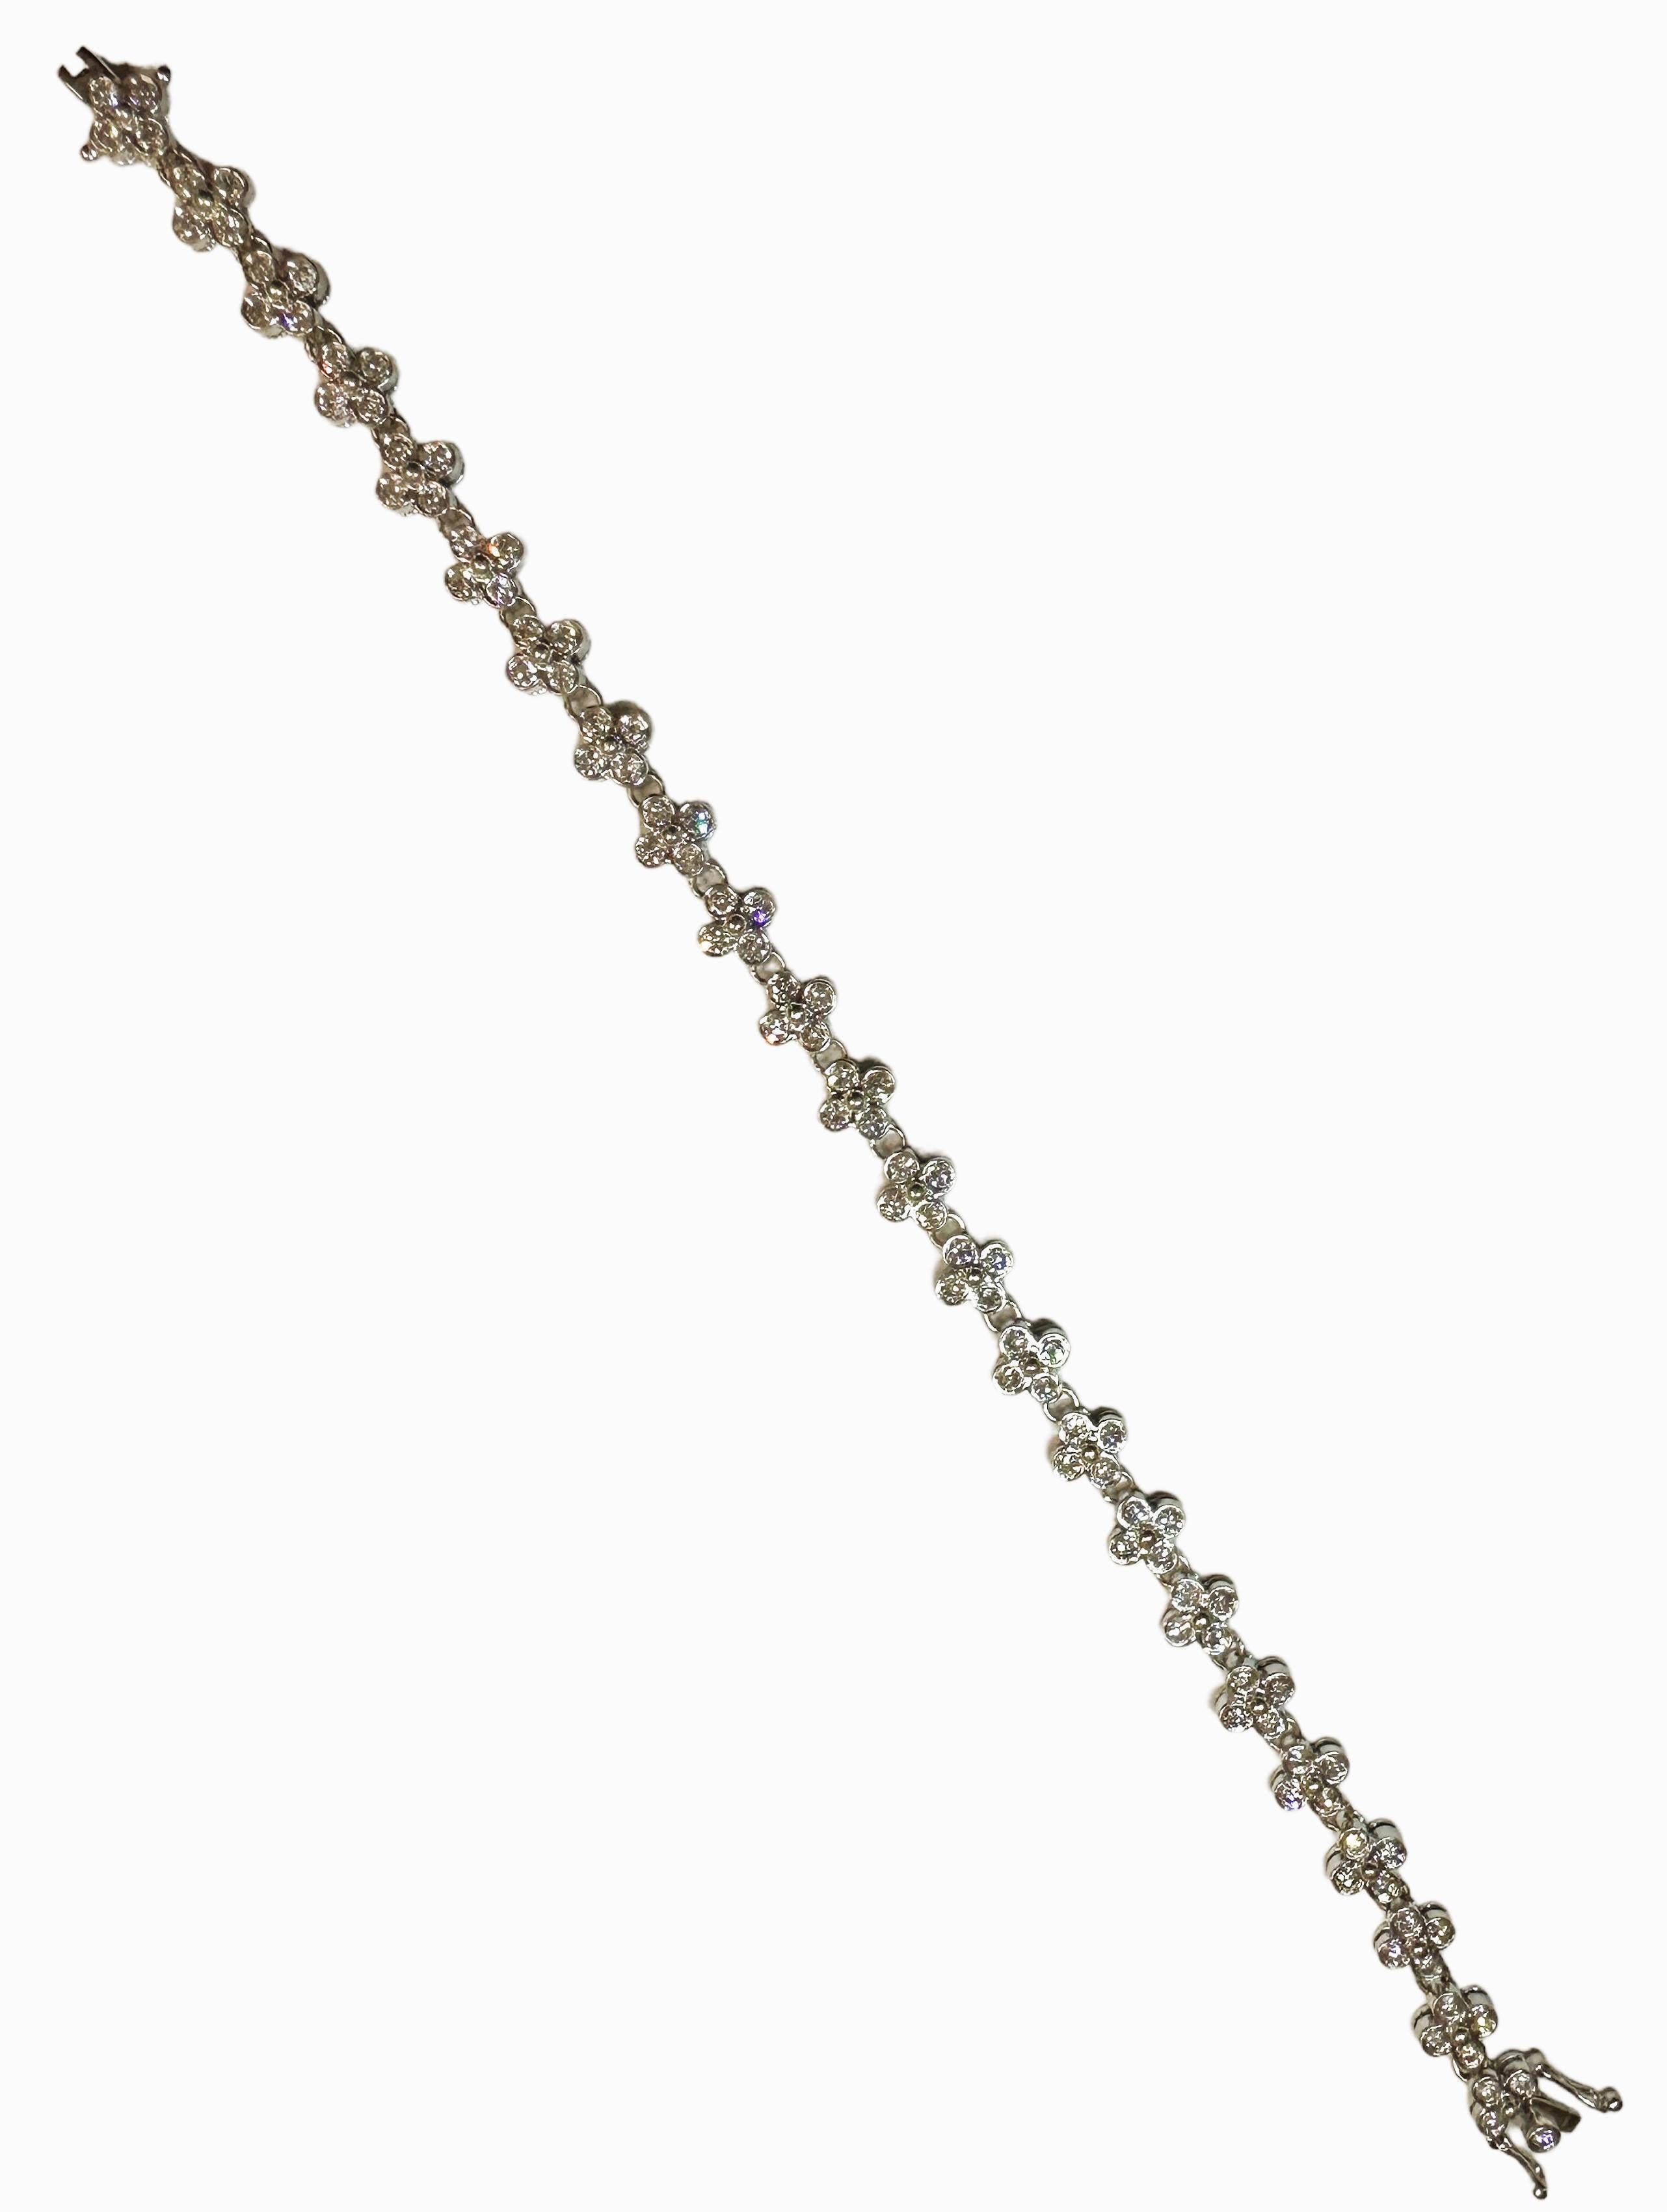 bergoma elastic bracelet